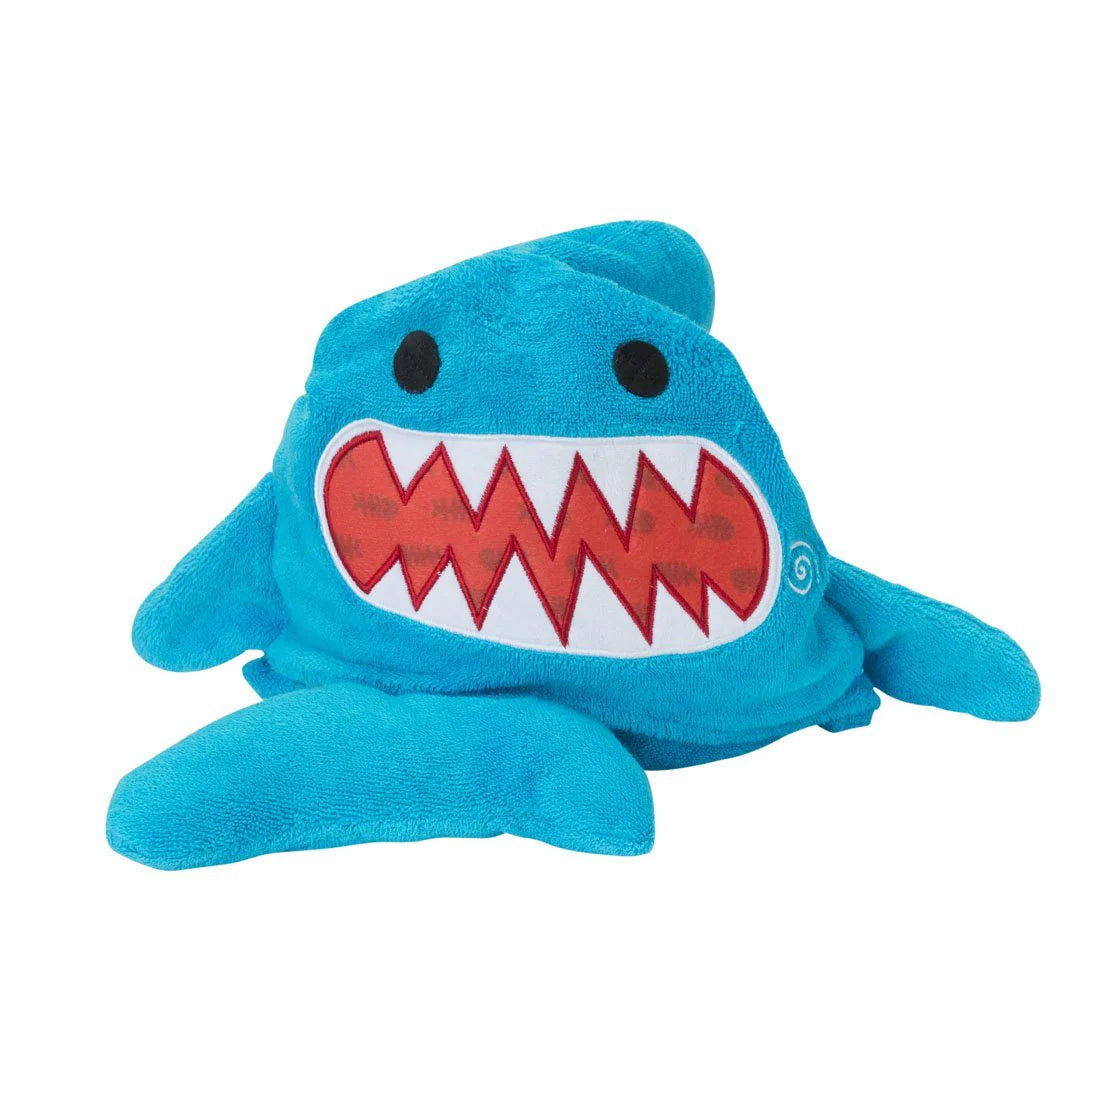 Personalized Kids Plush Terry Hooded Bath Towel - Shark